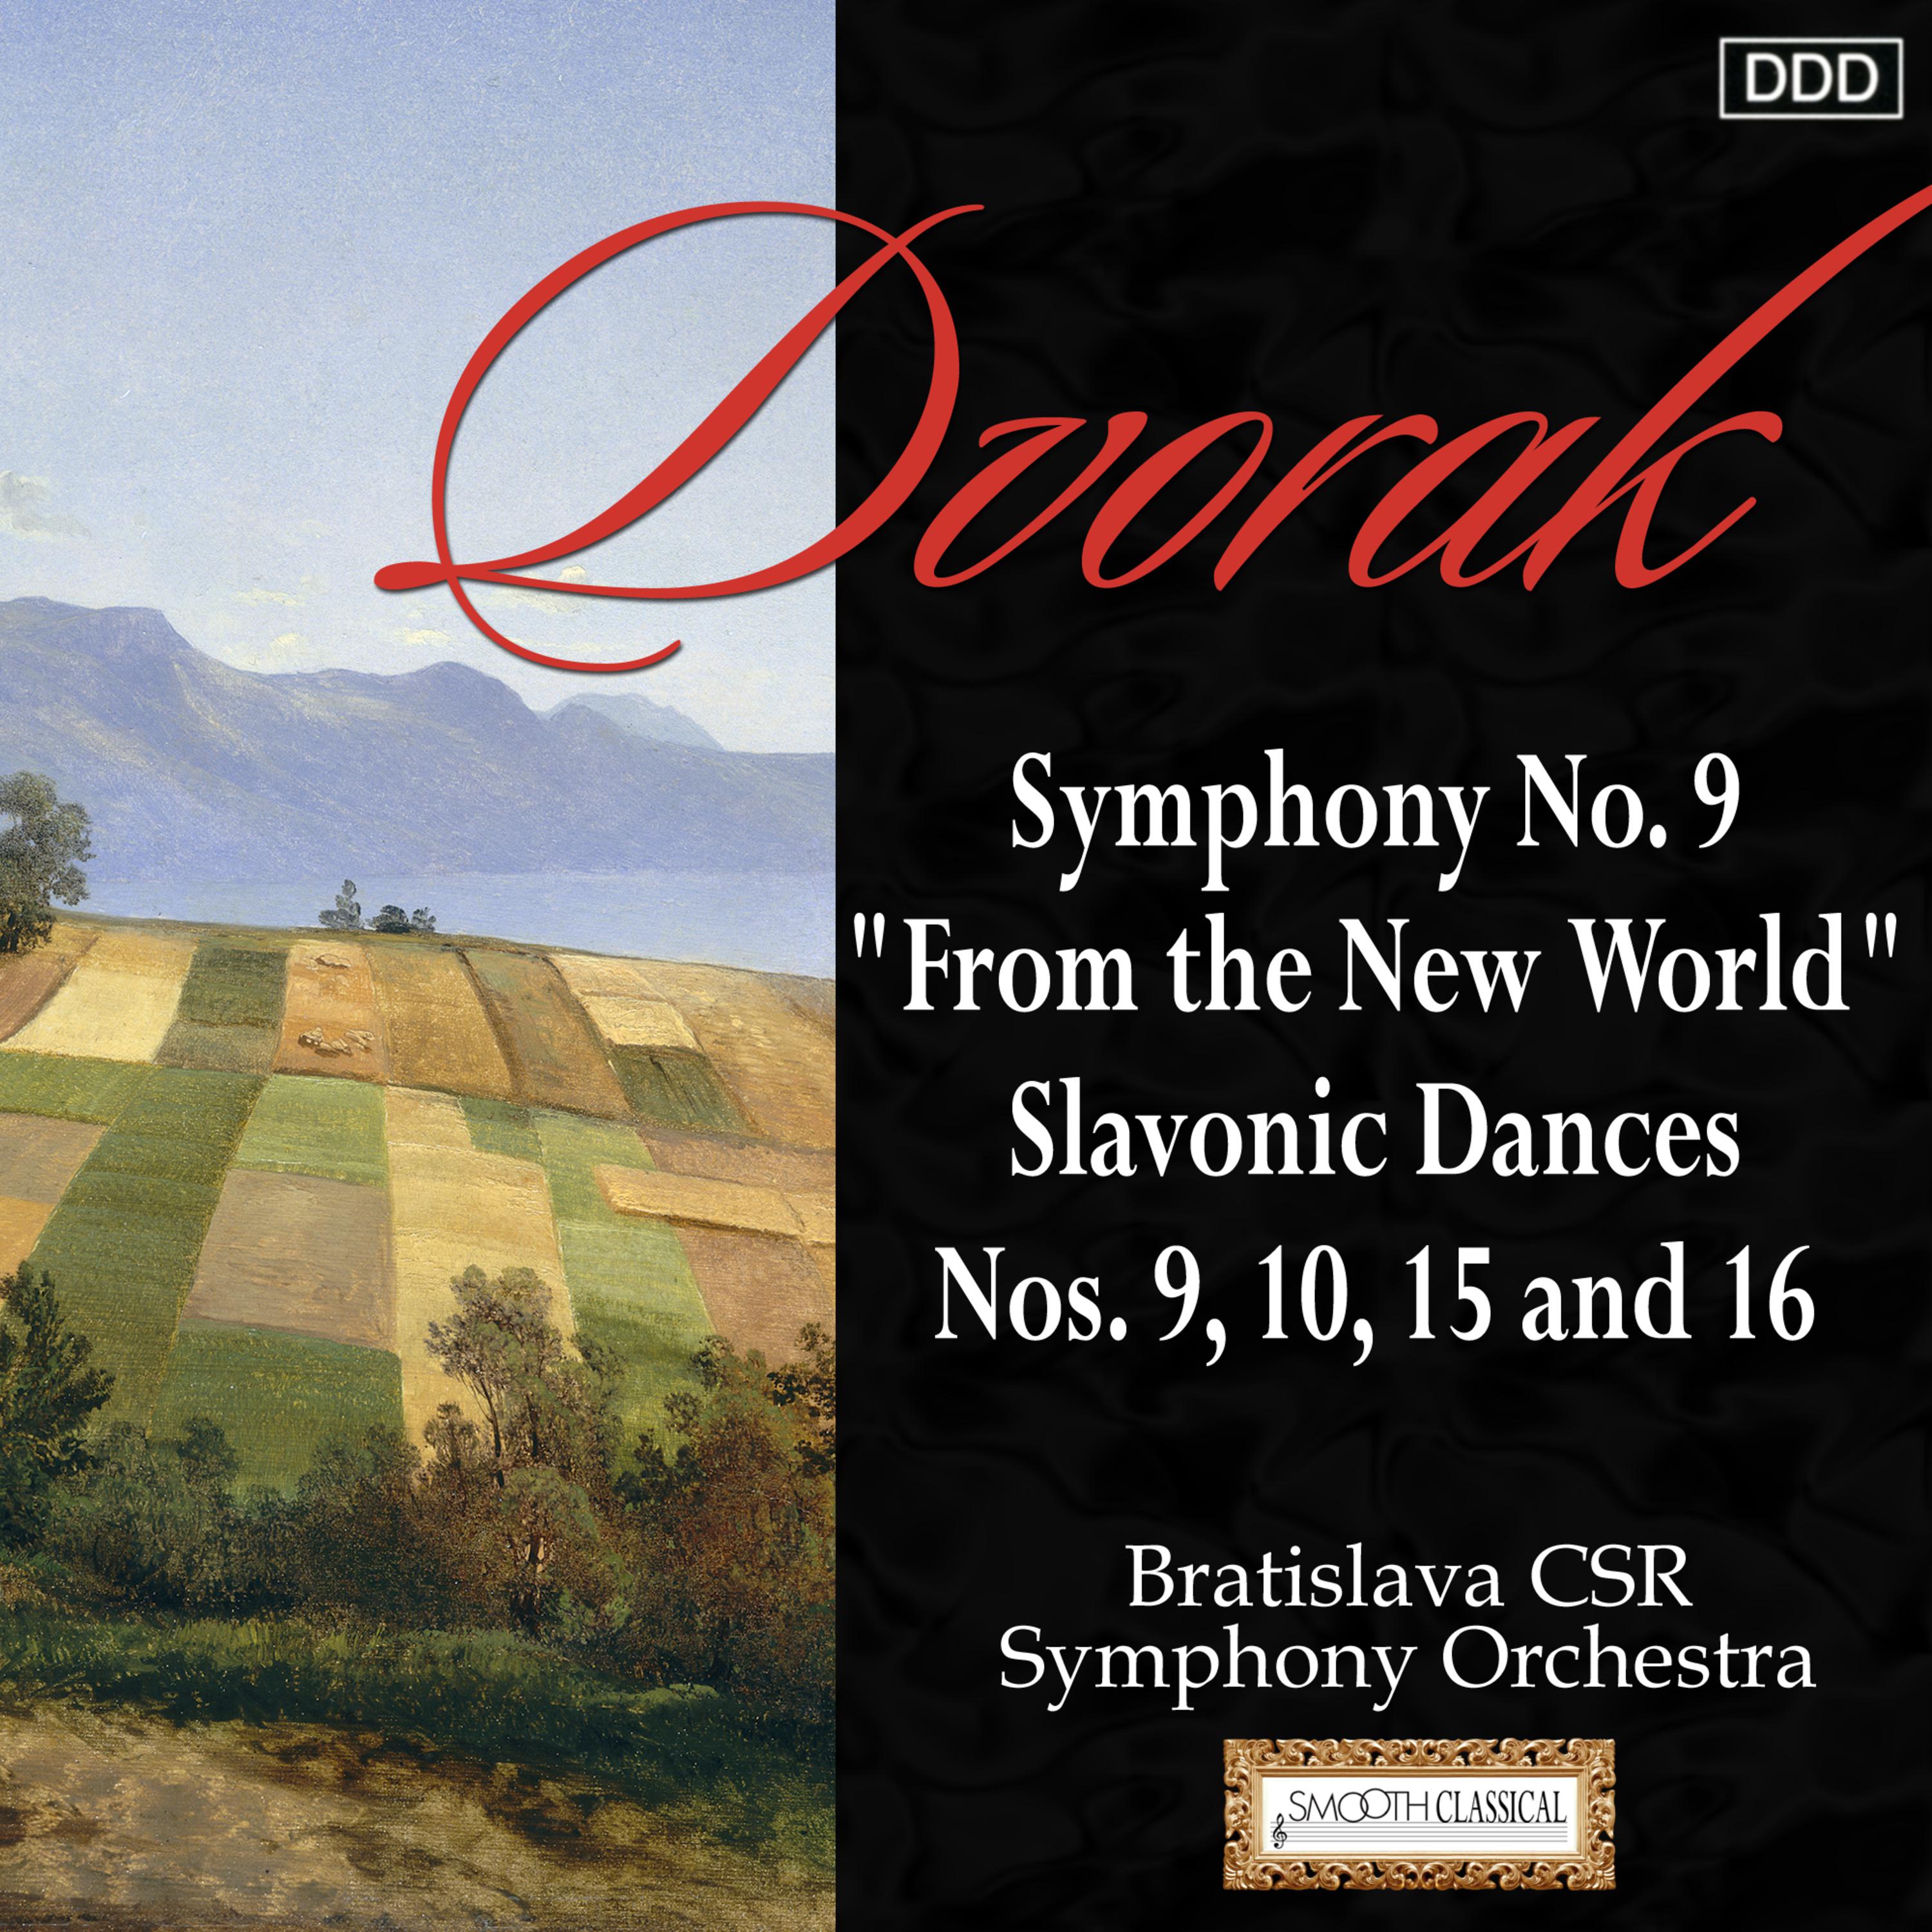 Dvorak: Symphony No. 9, "From the New World" - Slavonic Dances Nos. 9, 10, 15 and 16